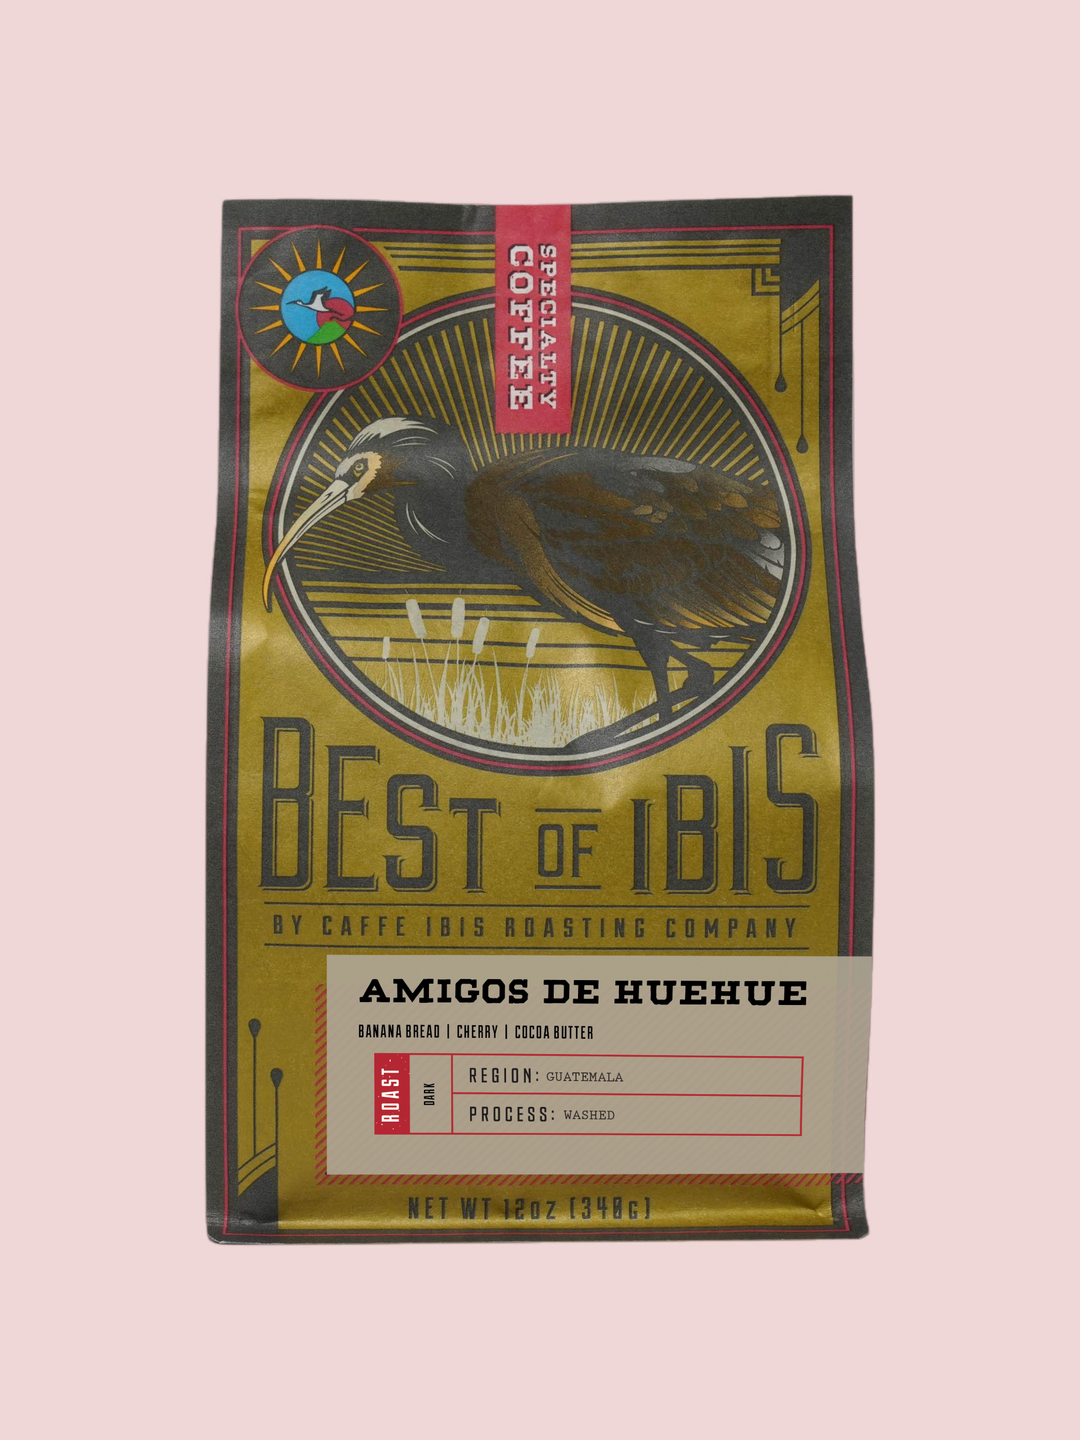 Caffe Ibis Amigos de Huehue coffee blend in a "Best of Ibis" twelve ounce bag; front view.